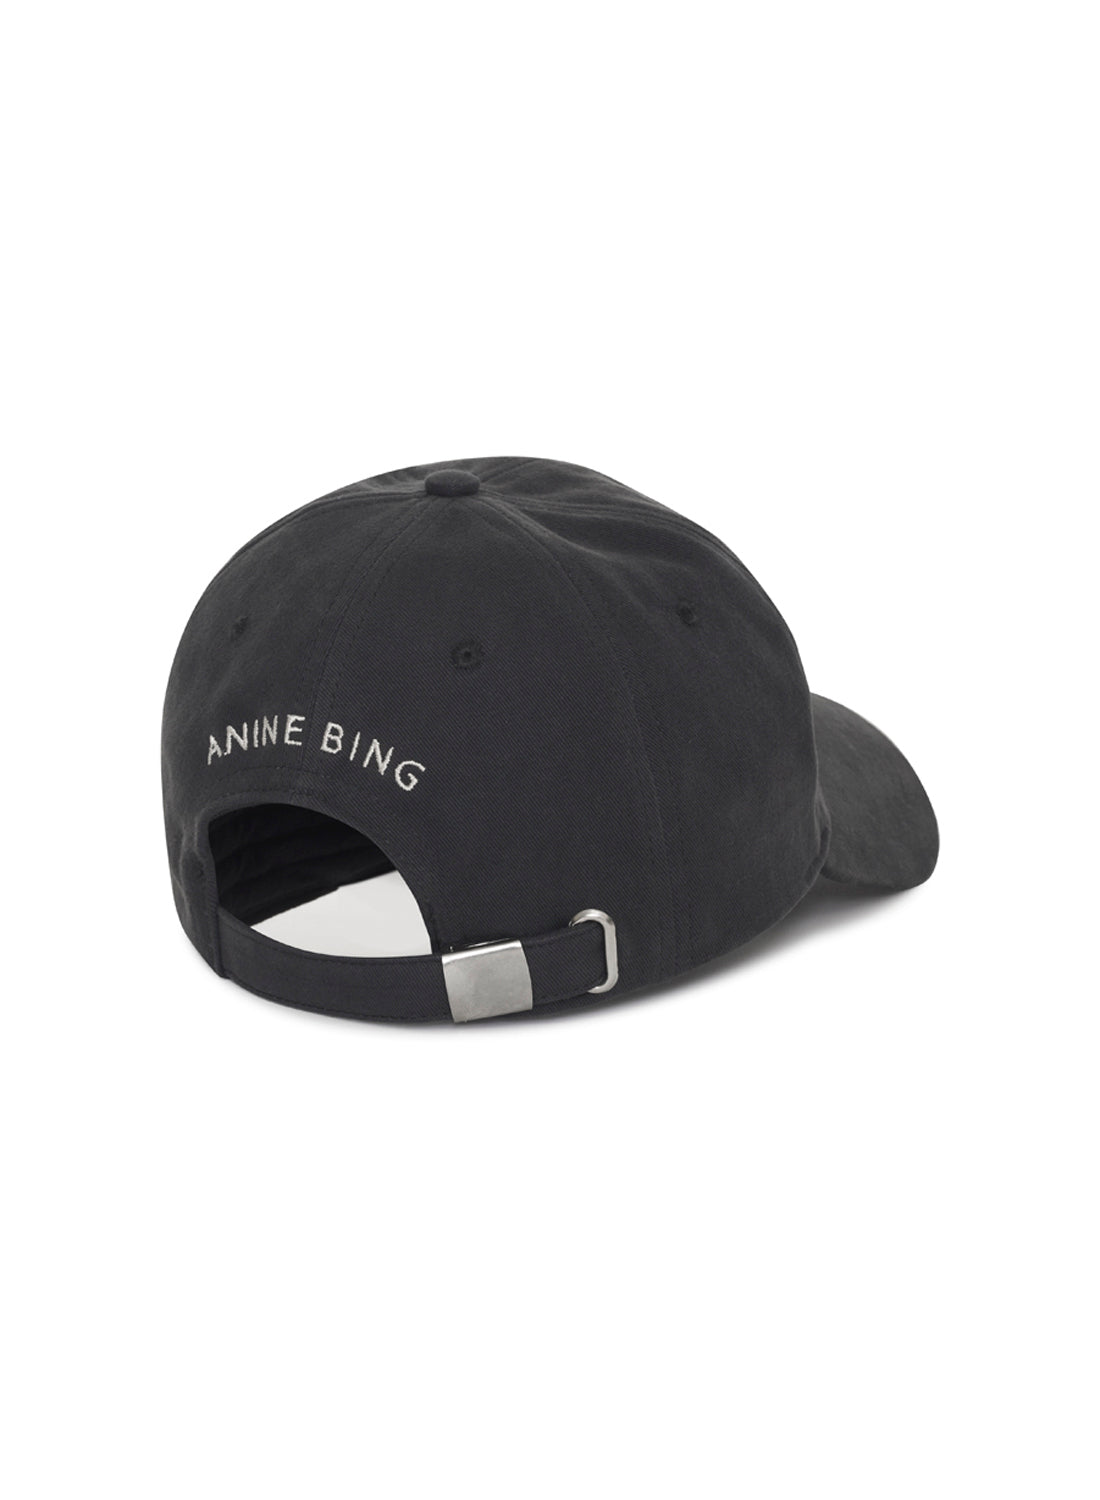 Anine Bing Jeremy Baseball Cap AB Vintage Black